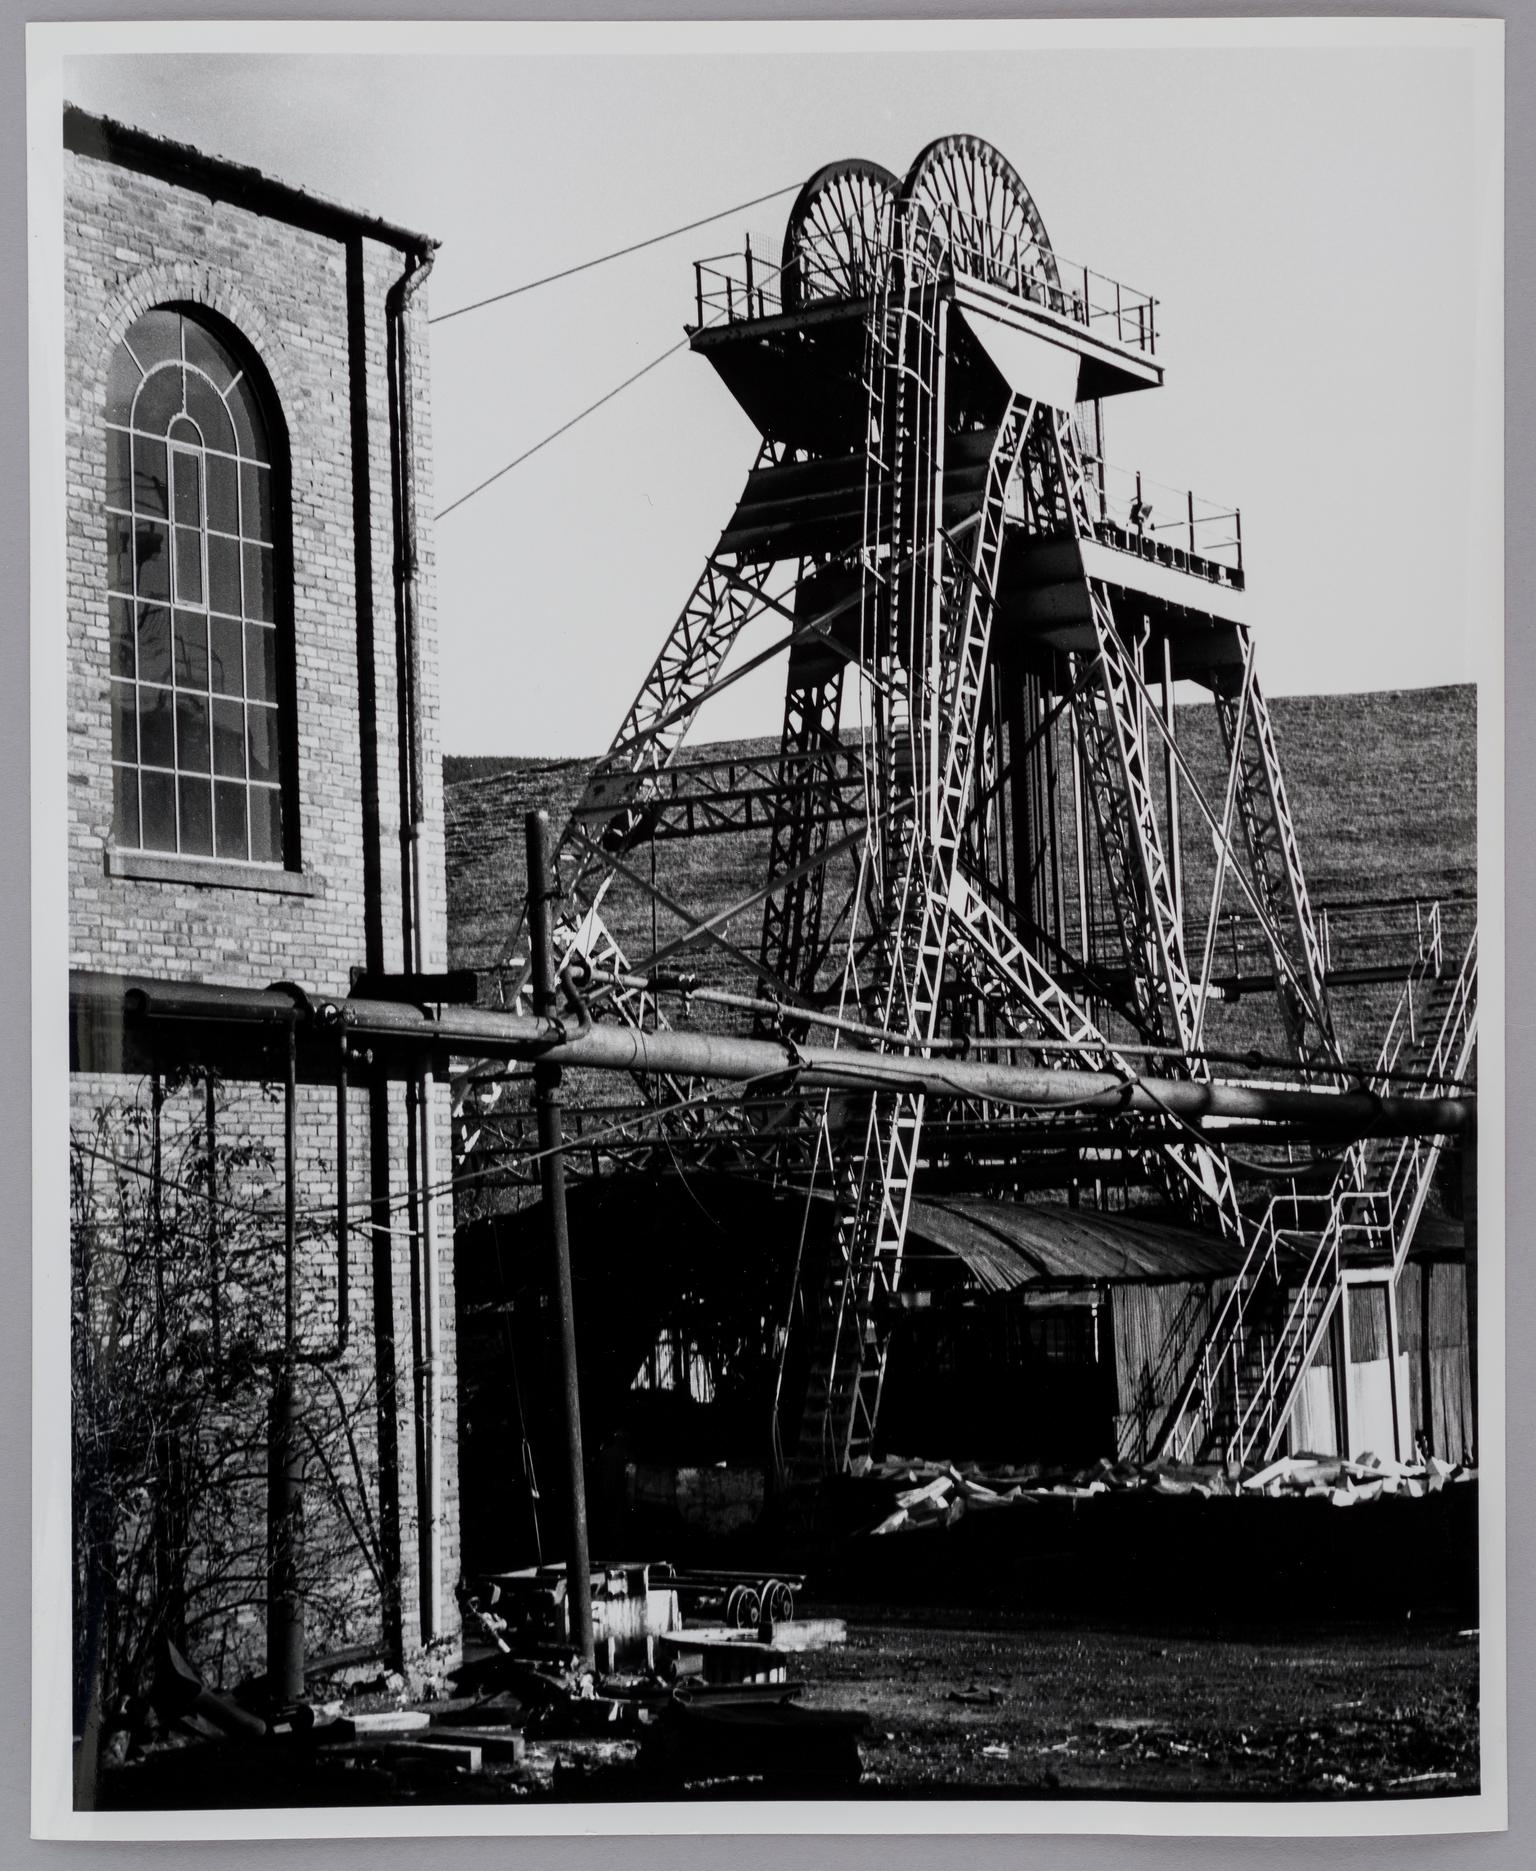 St. John's Colliery, photograph